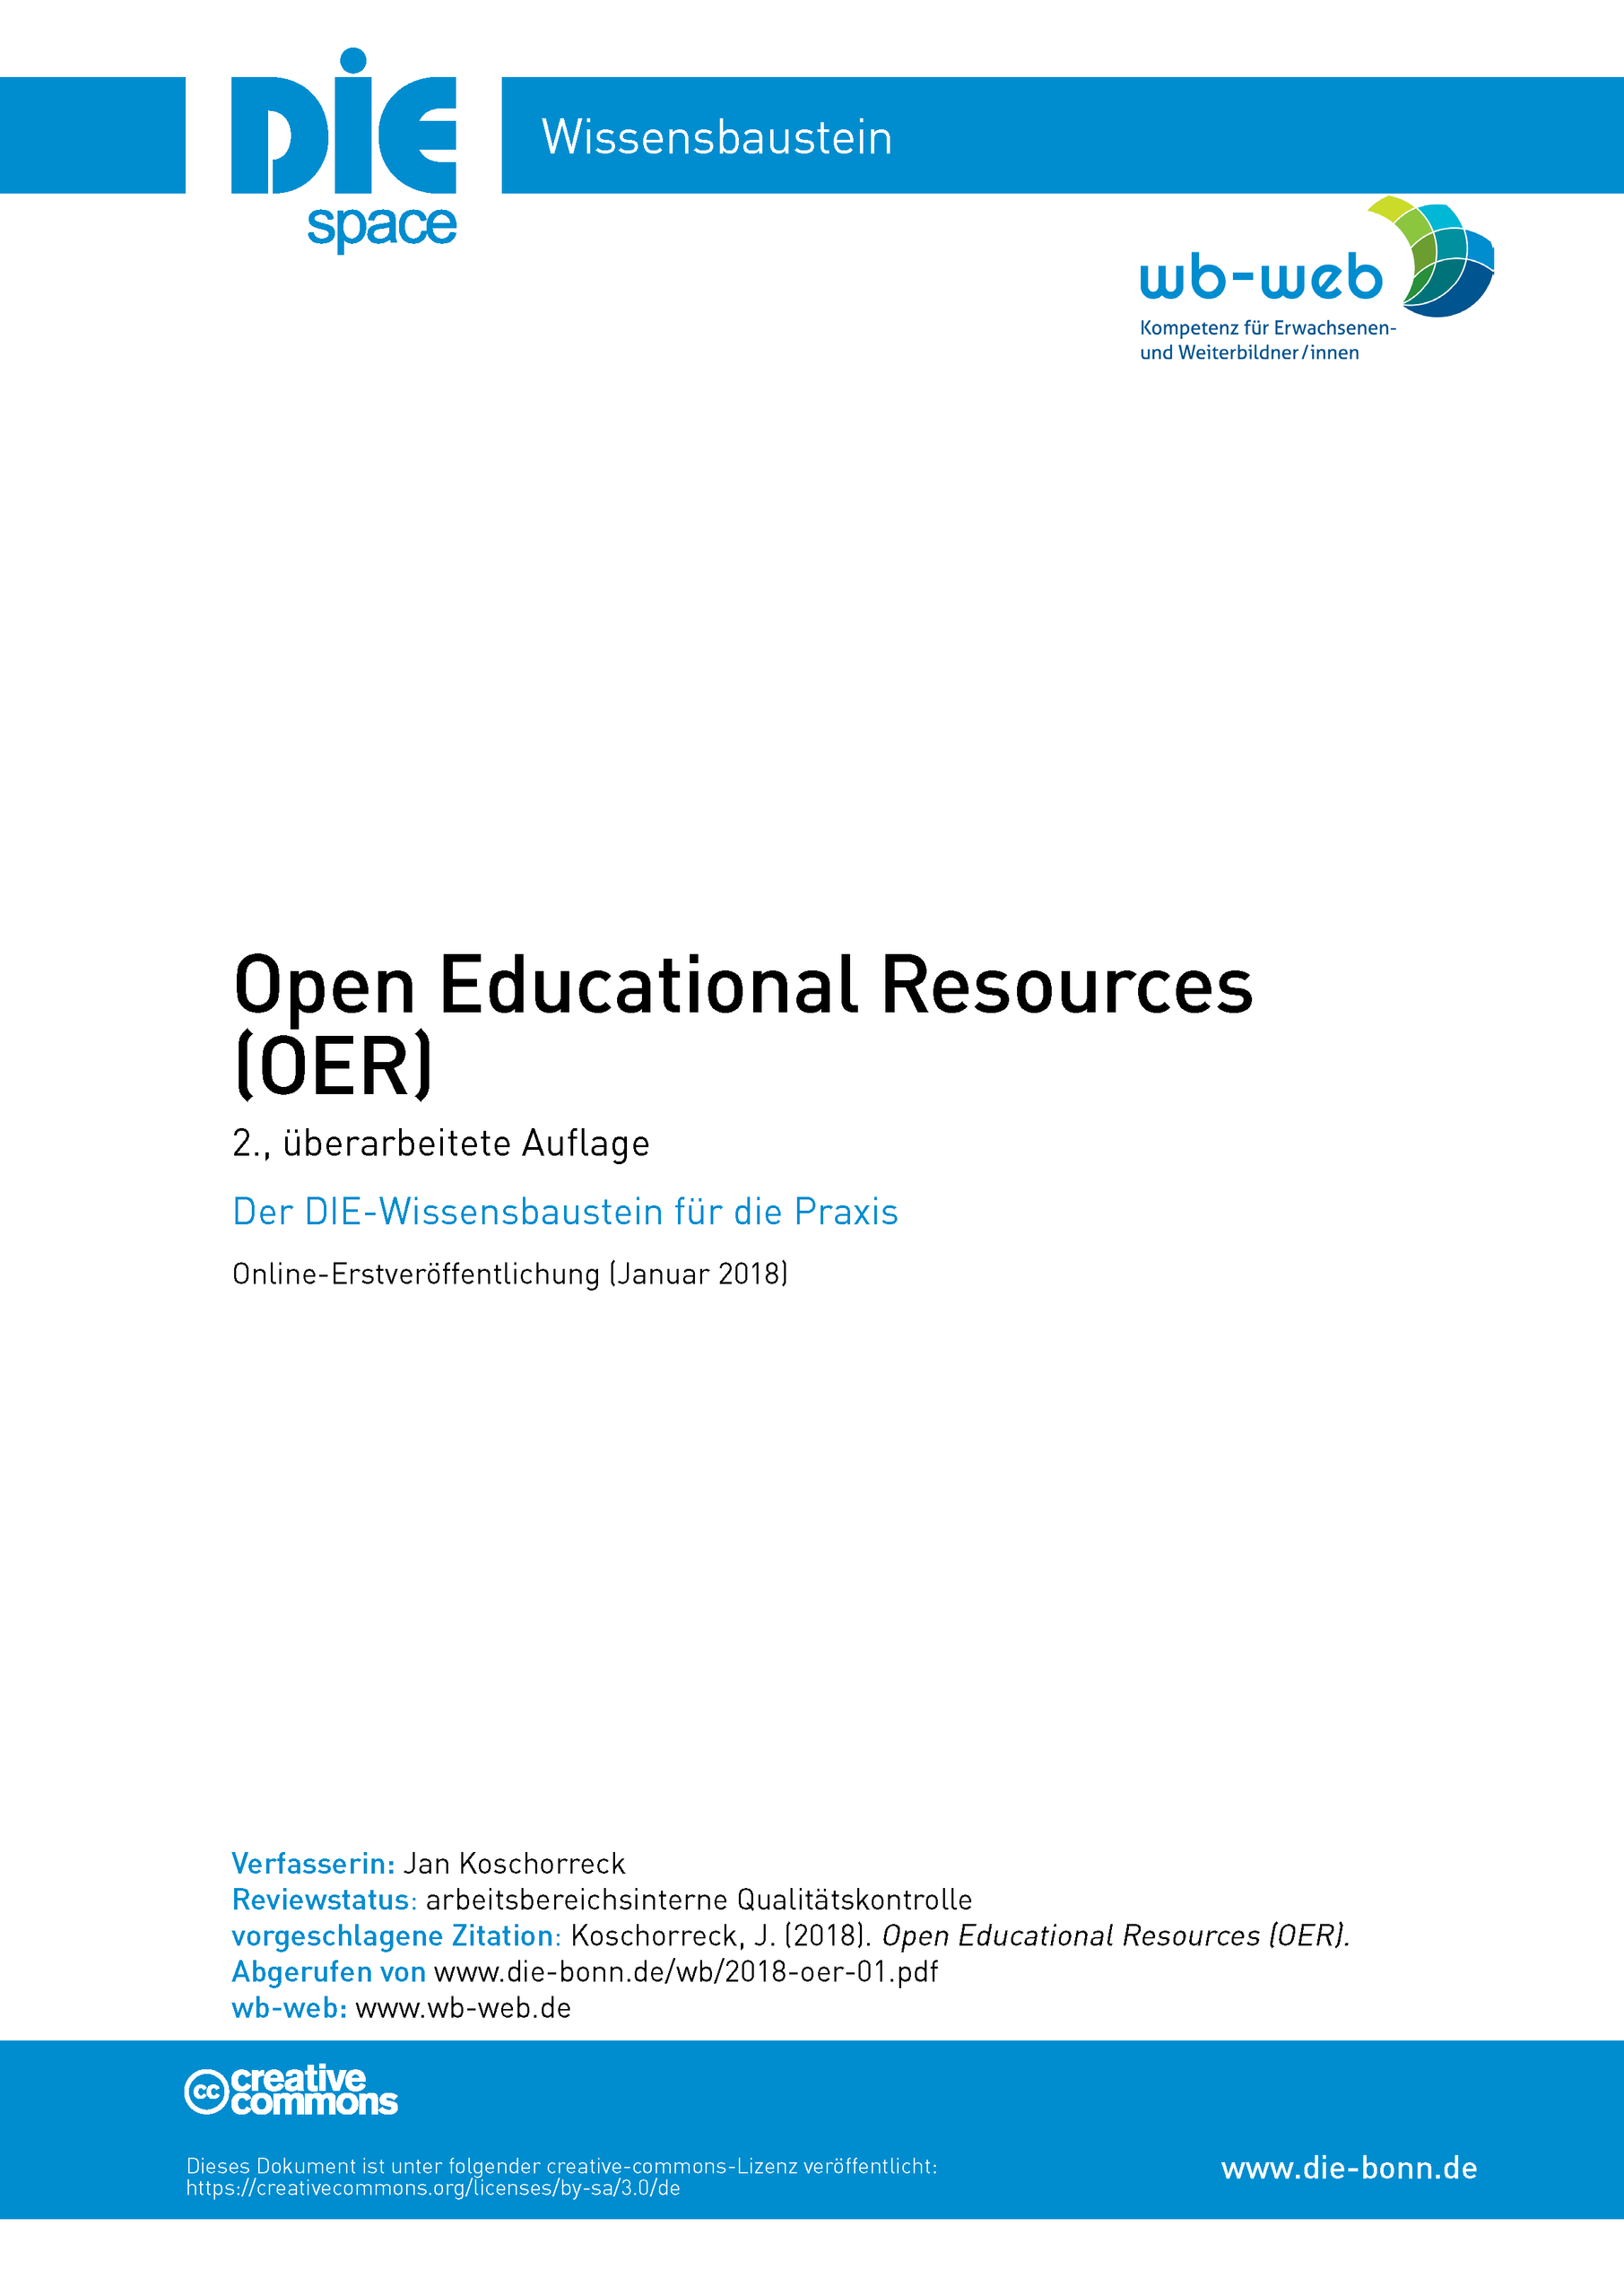 Download PDF: Wissensbaustein Open Educational Resources